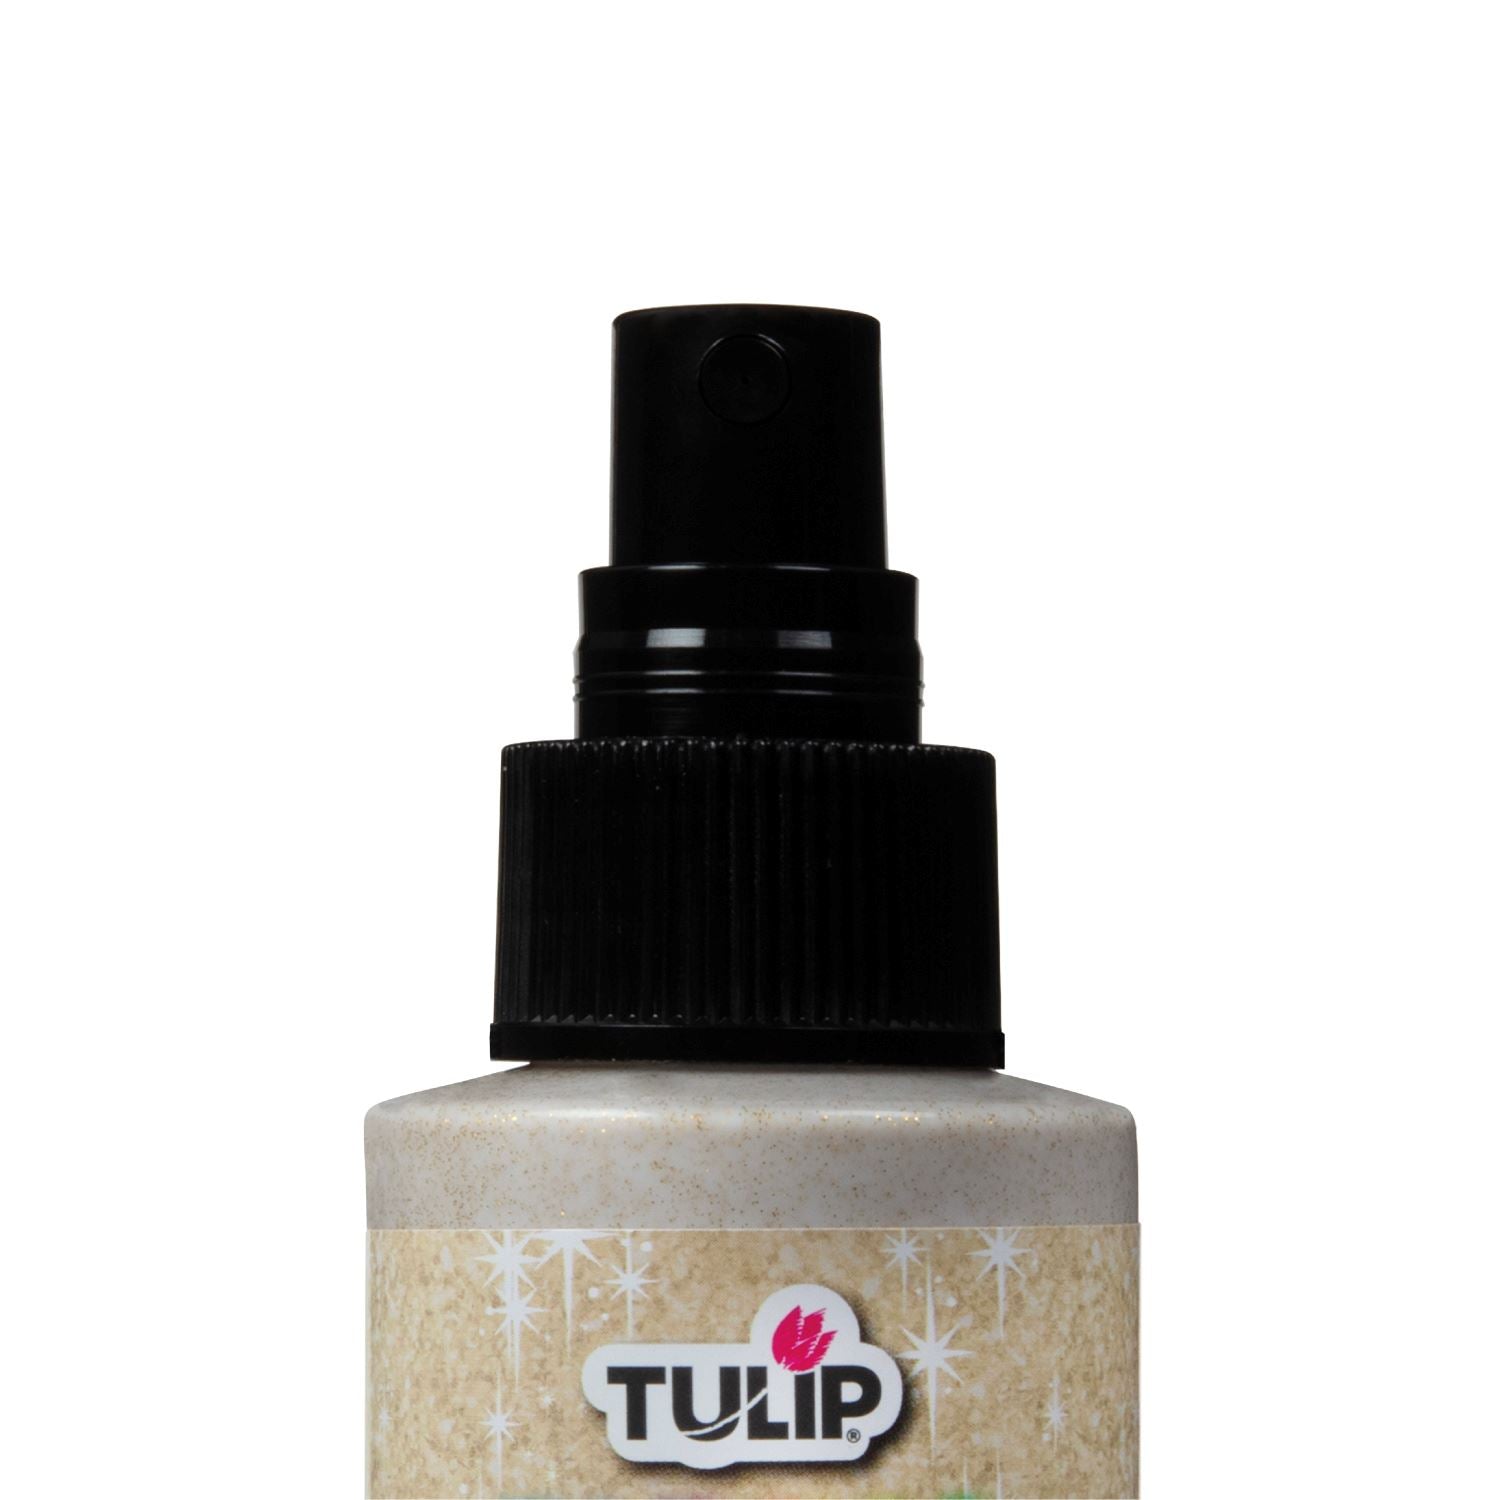 Tulip Fabric Spray Paint 4oz-Glistening Gold Glitter, 1 count - Ralphs